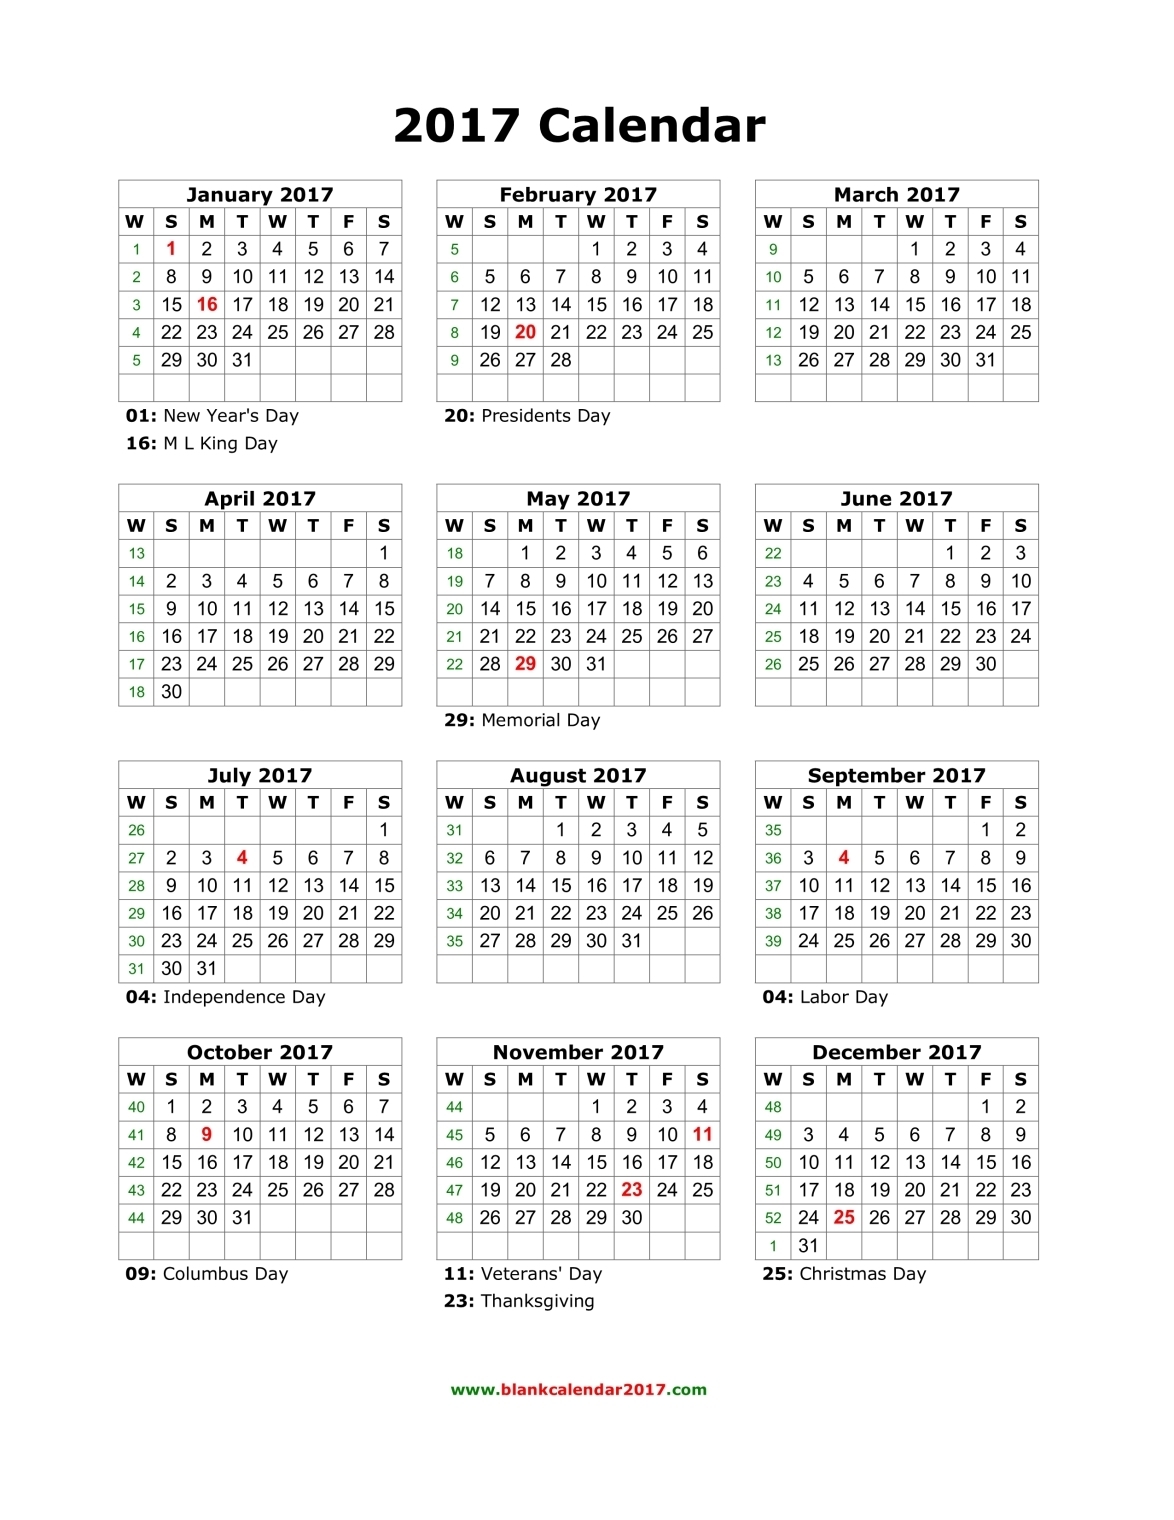 January 2017 calendar template | January 2017 printable calendar